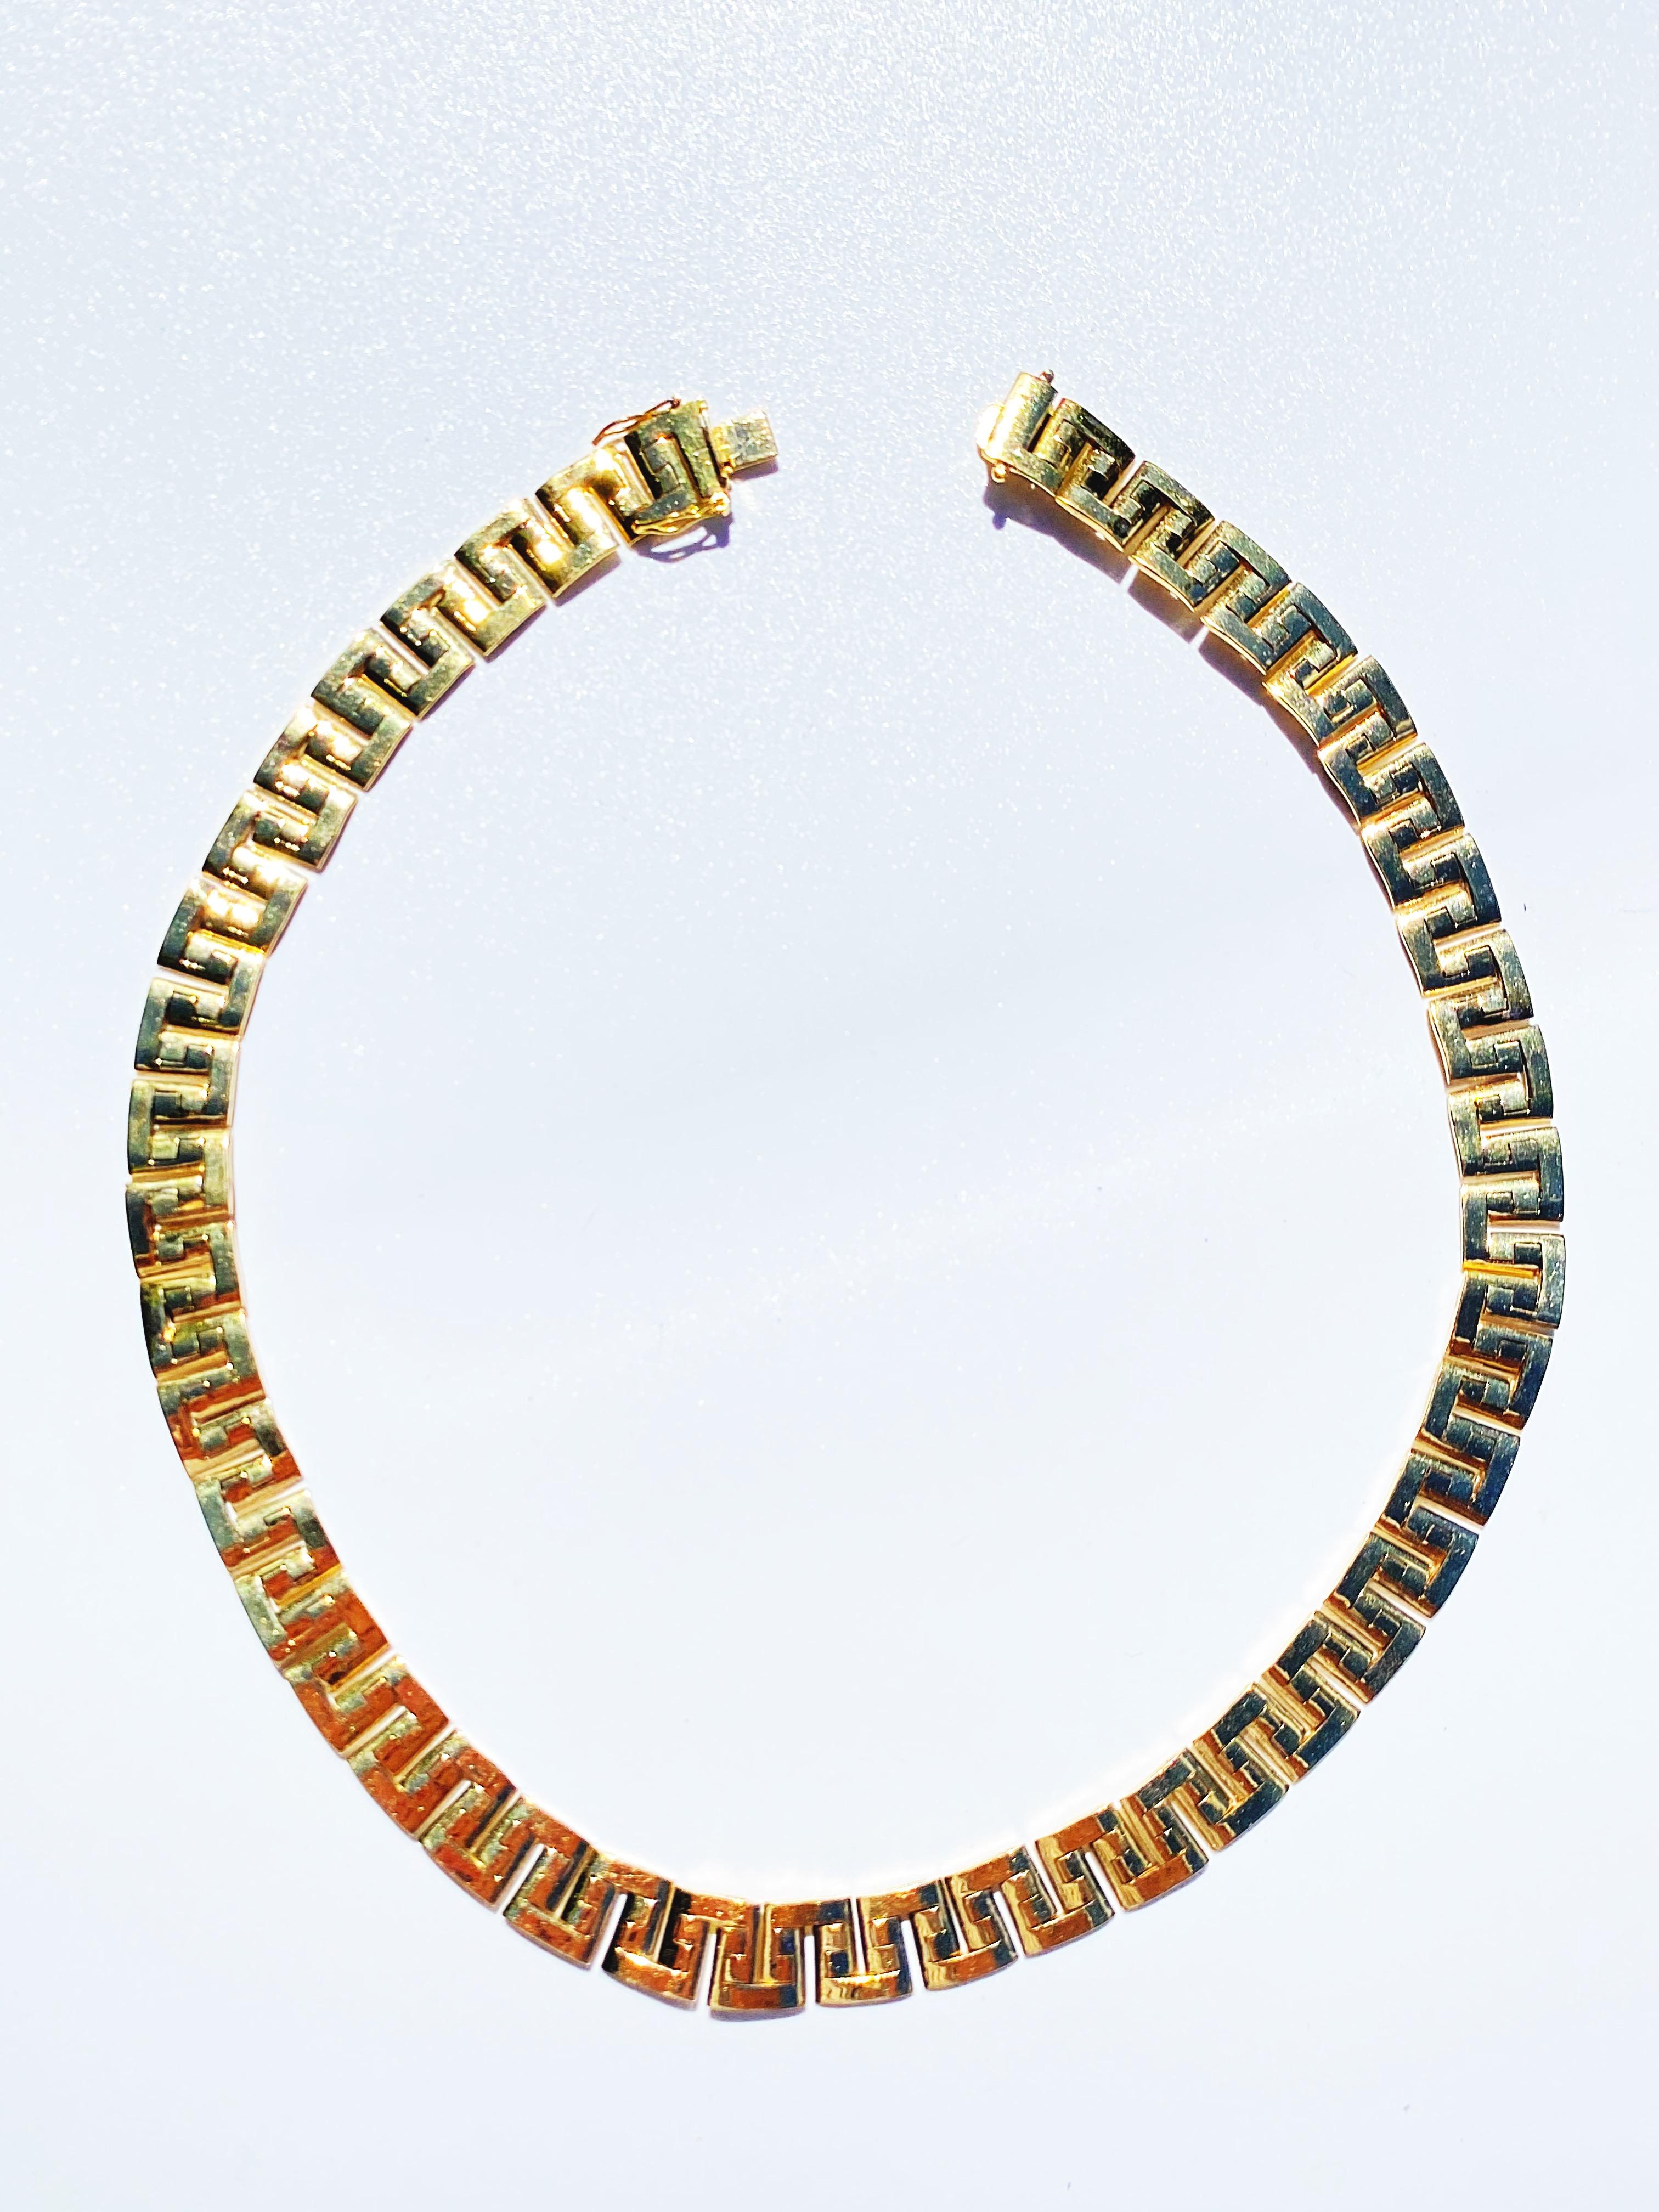 Retro 157 Grams 18 Karat Gold Link Chain Design Gold Necklace and Bracelet Men's Set For Sale